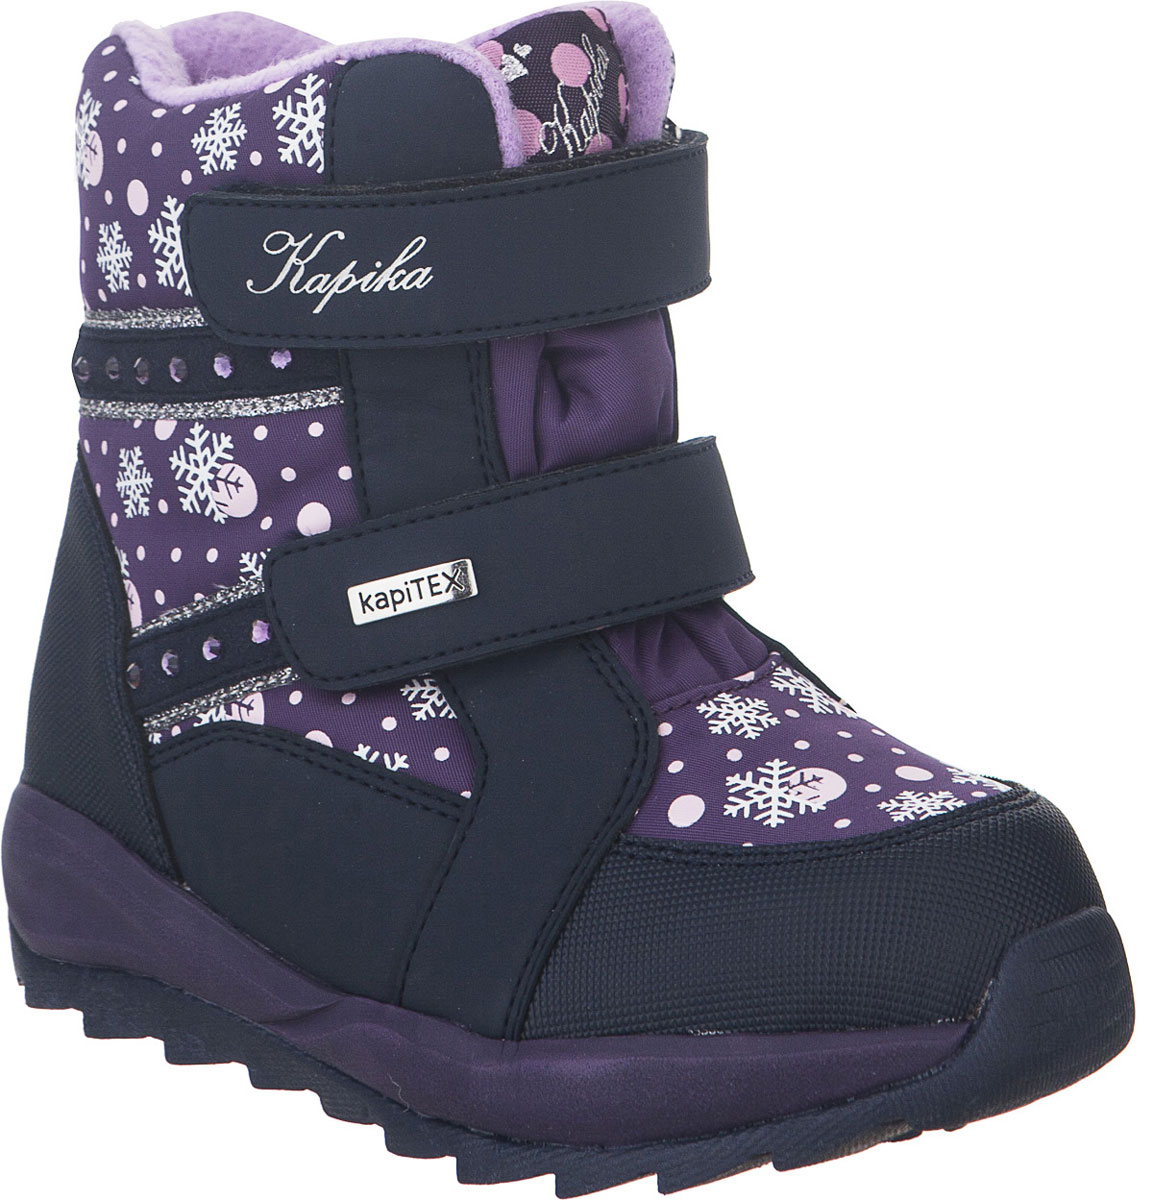 Ботинки для девочки Kapika, цвет: фиолетовый, темно-синий. 42240-2. Размер 30